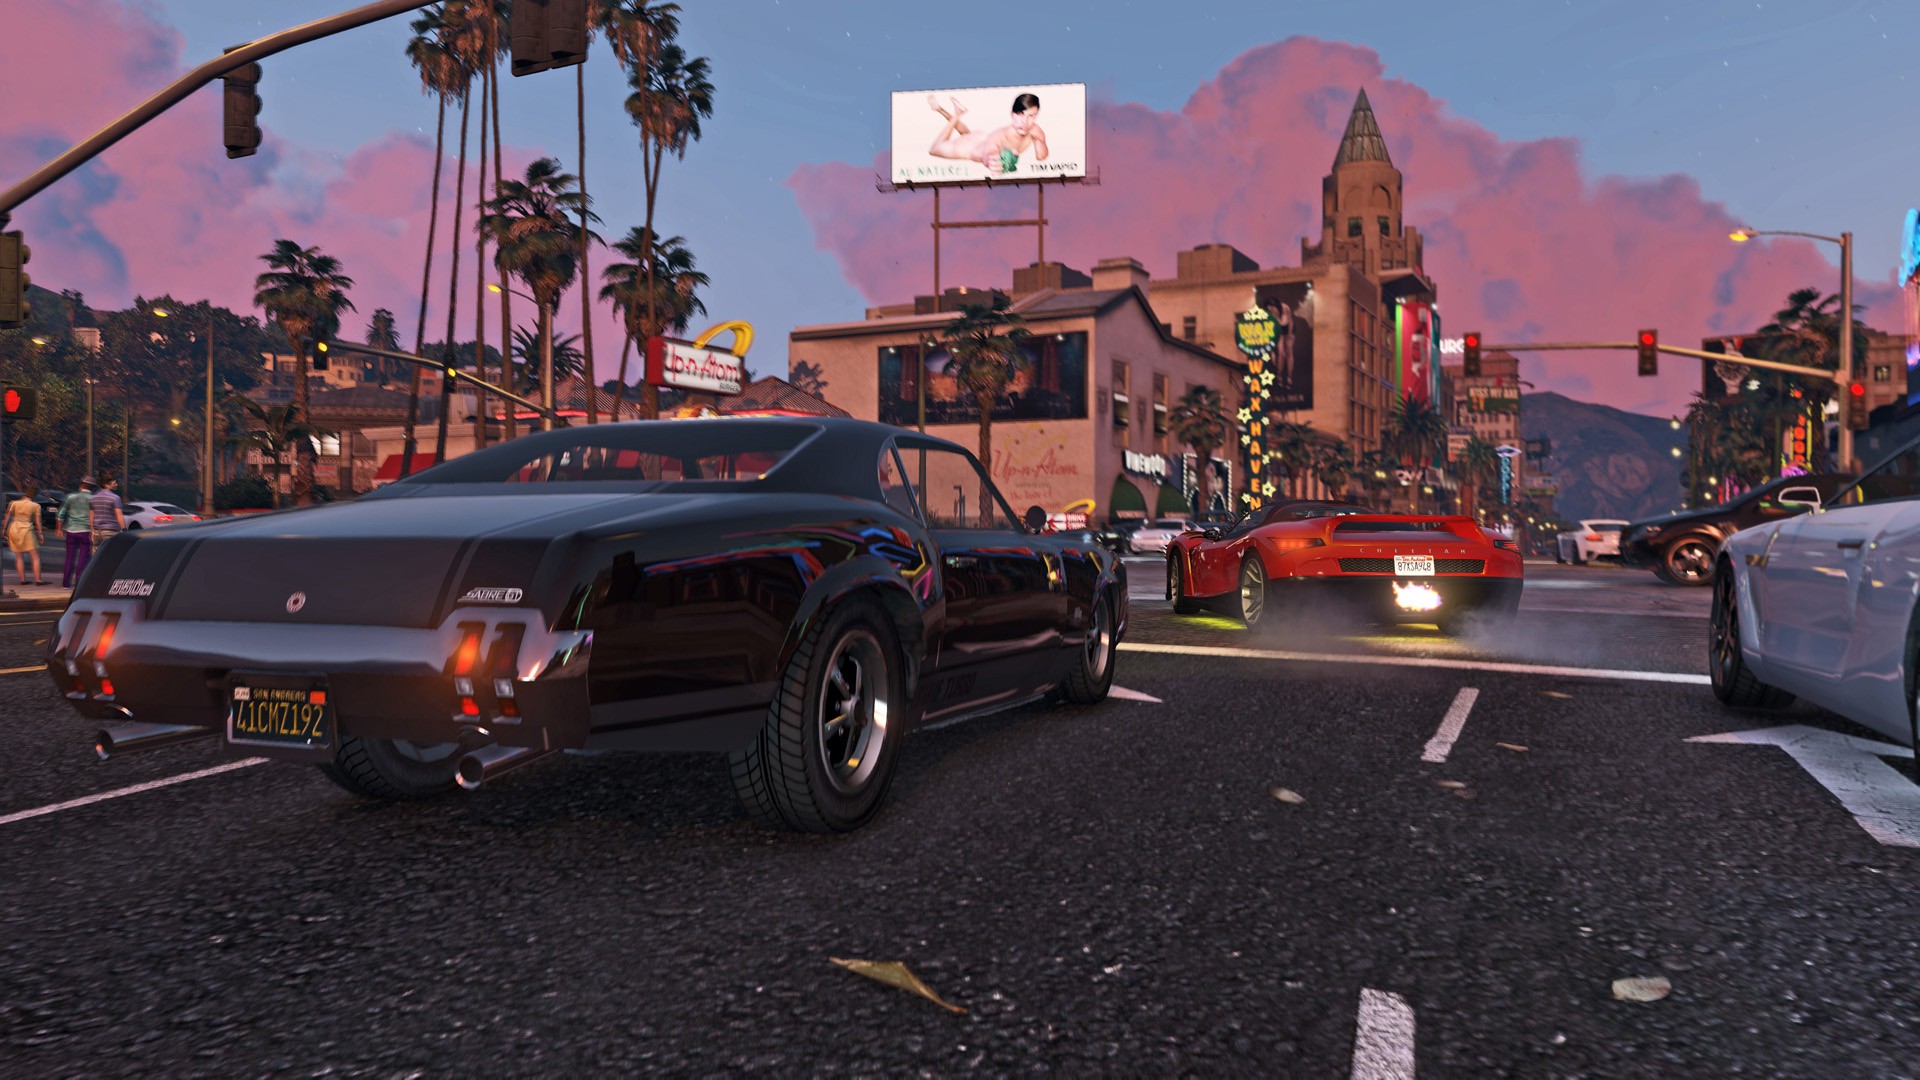 Buy Grand Theft Auto 5 (GTA 5)